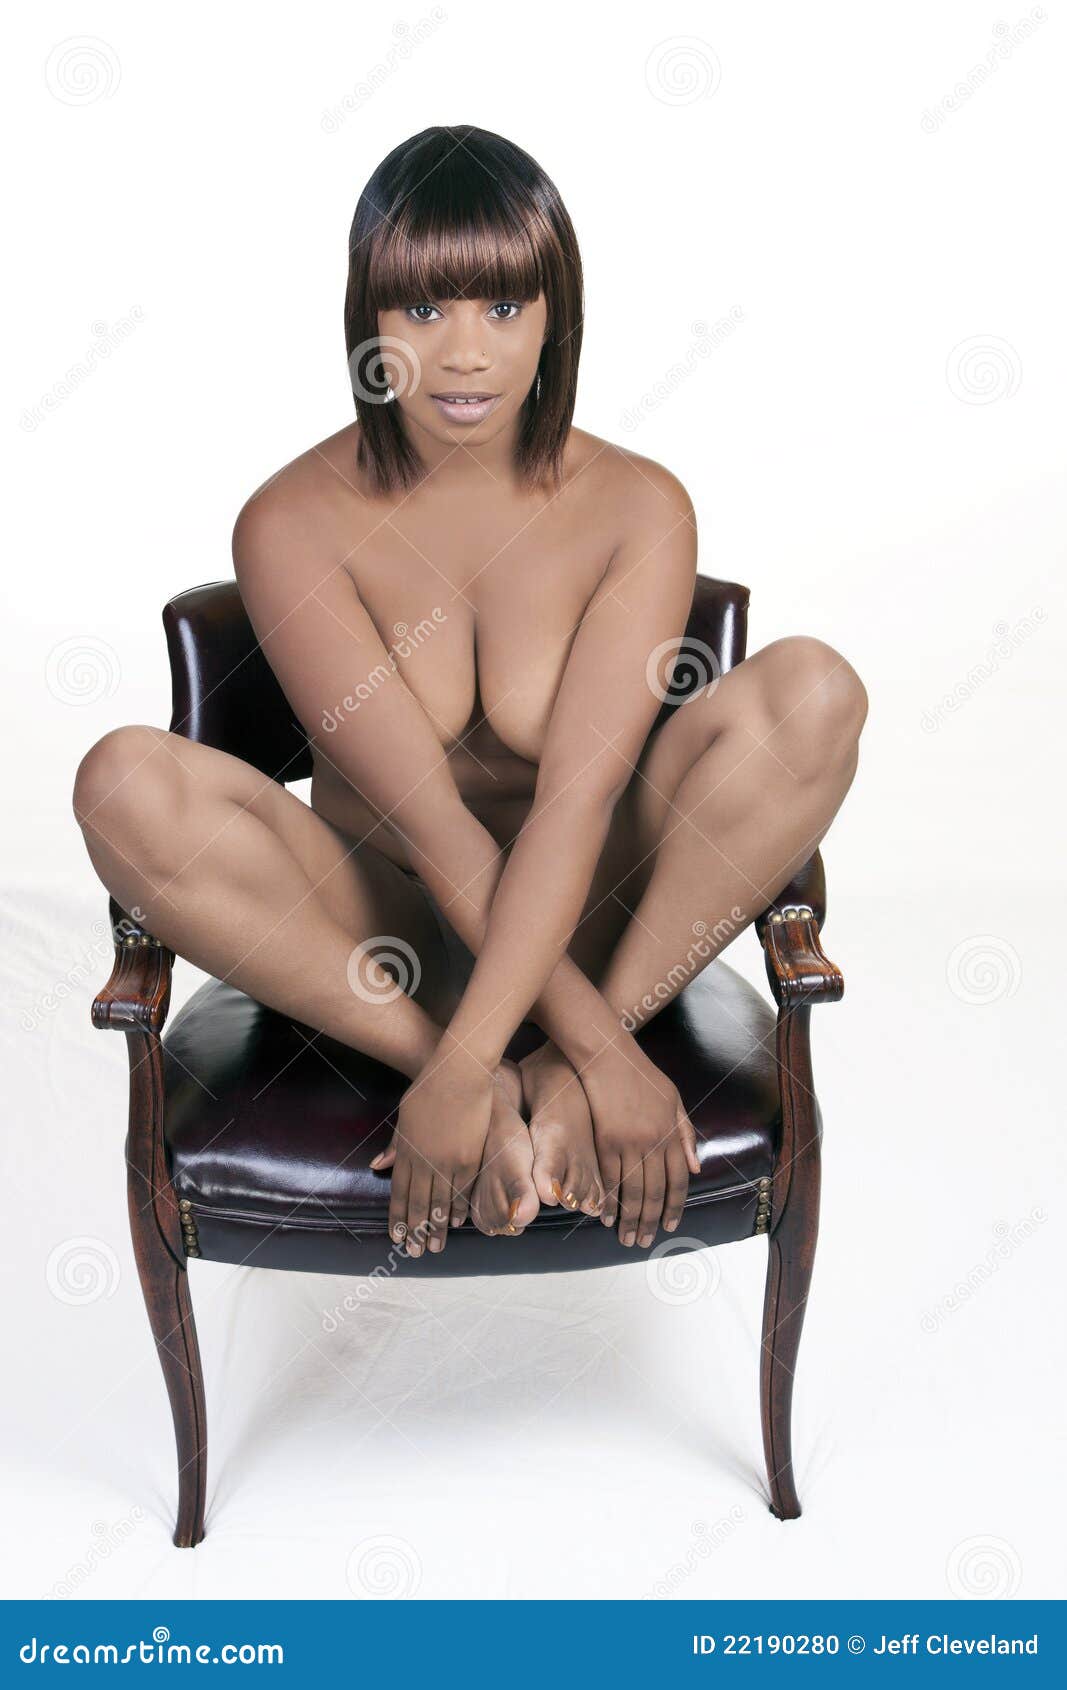 deborah stilligan recommends young black girls nude pic